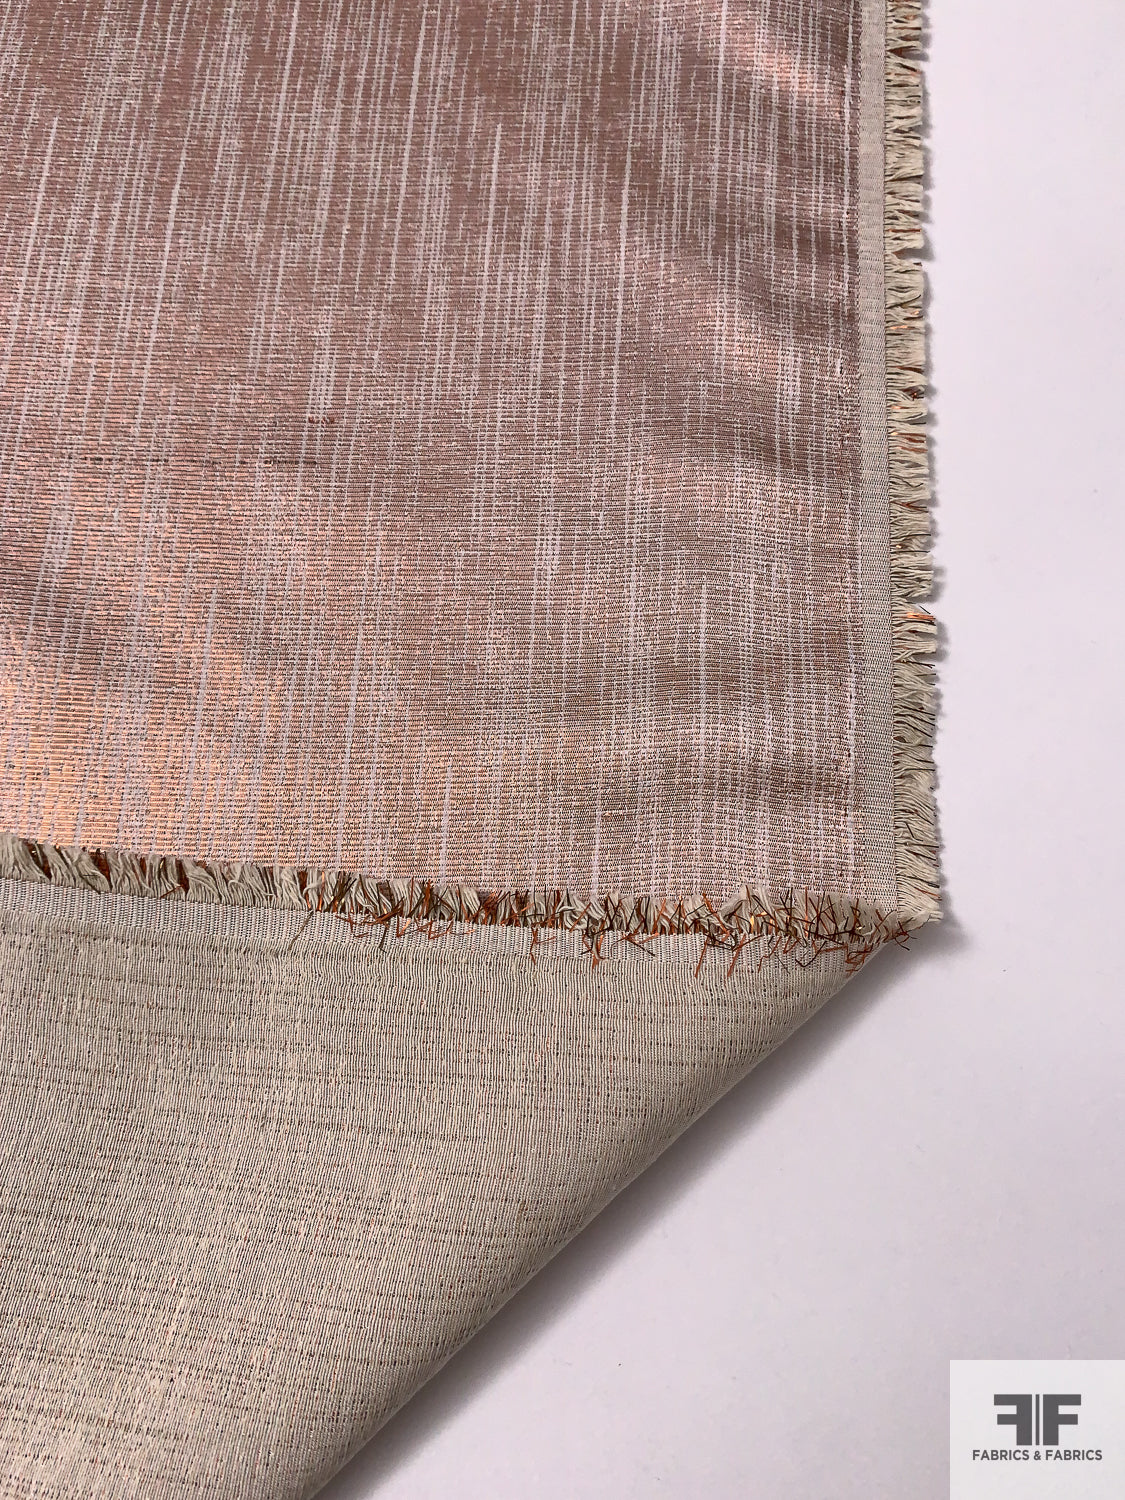 Italian Linen-Weave Novelty Lamé - Metallic Rose Gold / Natural